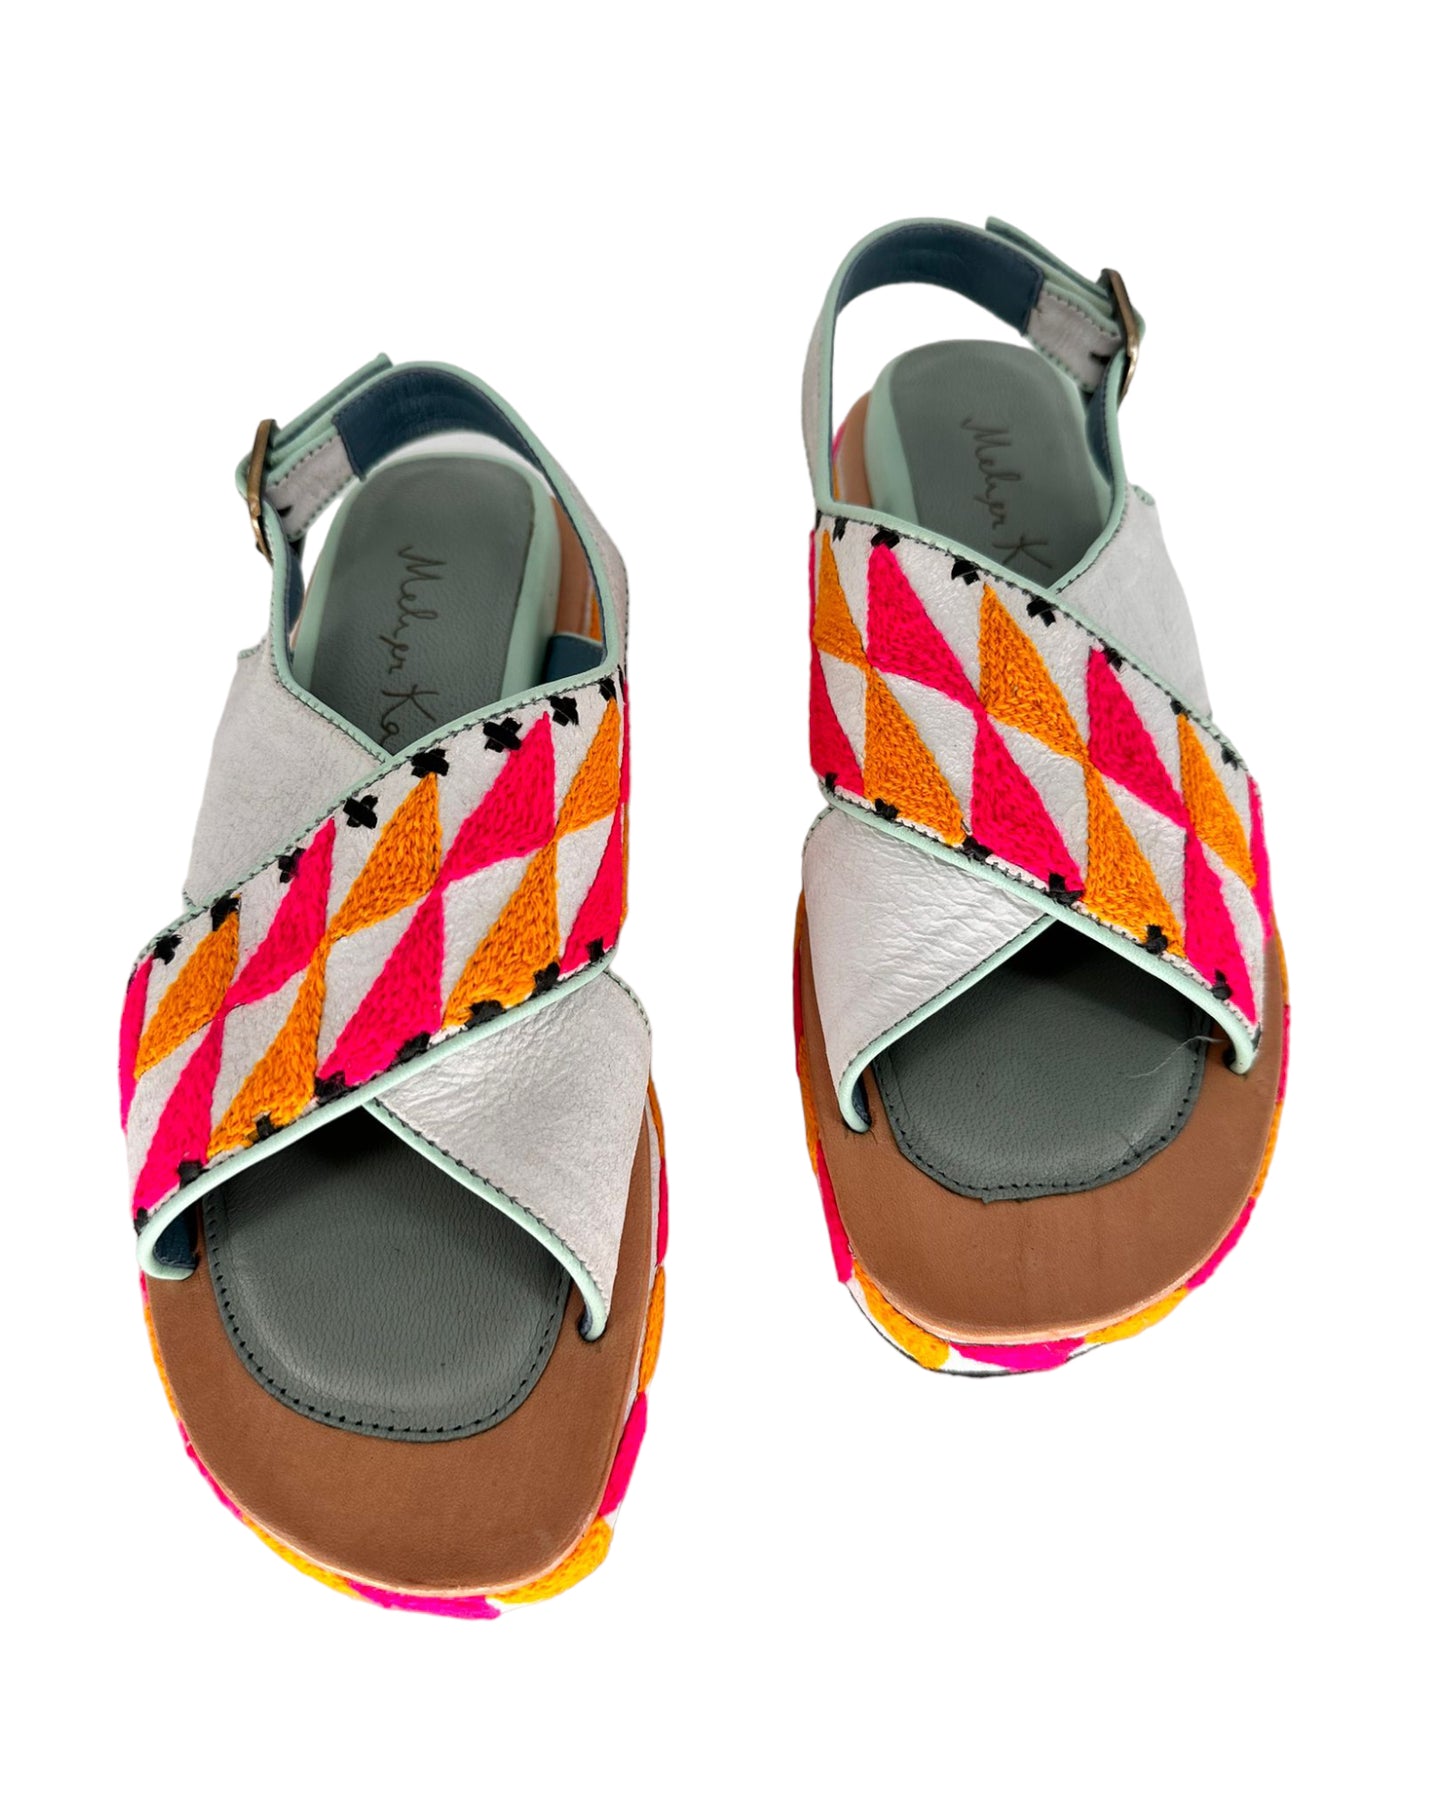 Ponza Geo Block leather sandals